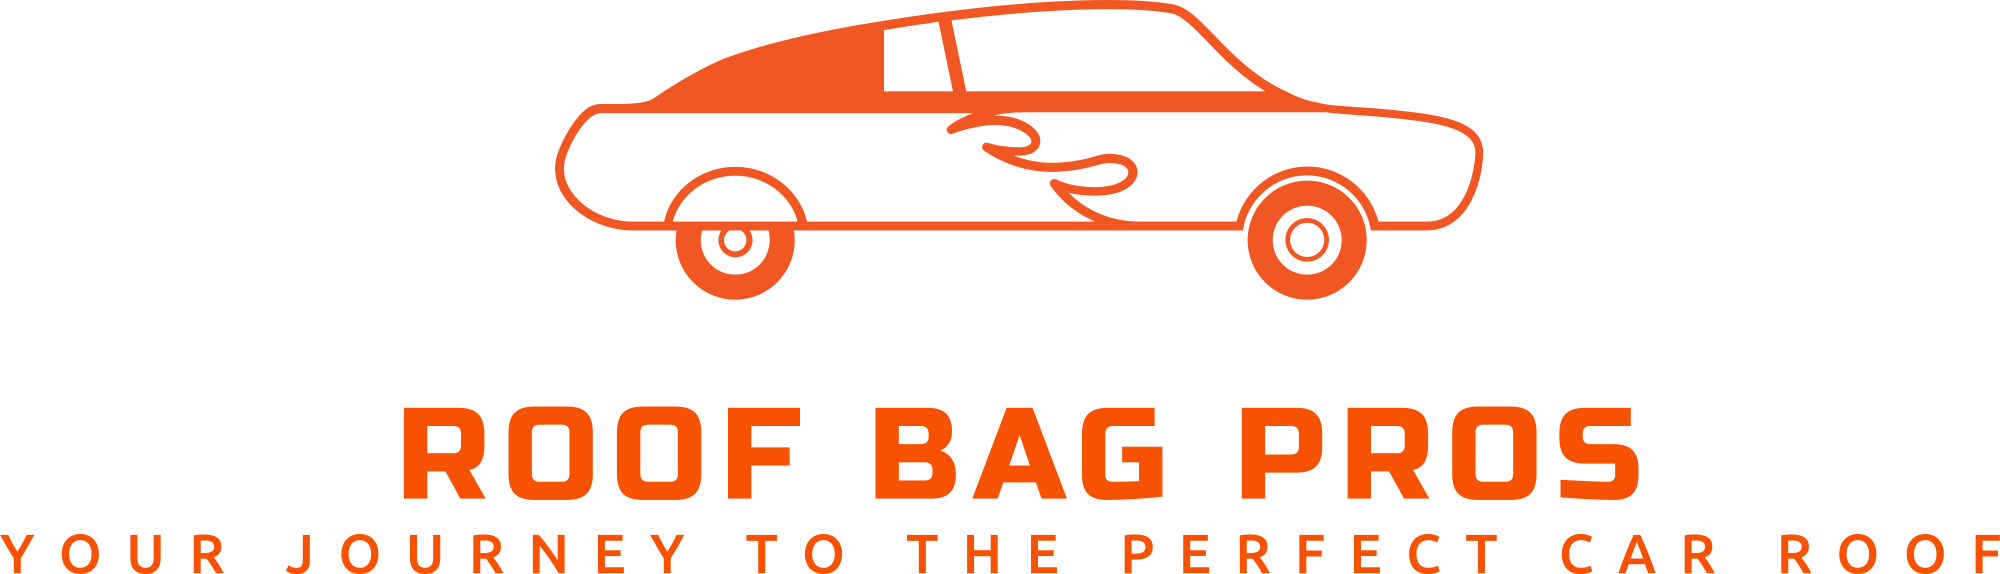 Roof Bag Pros